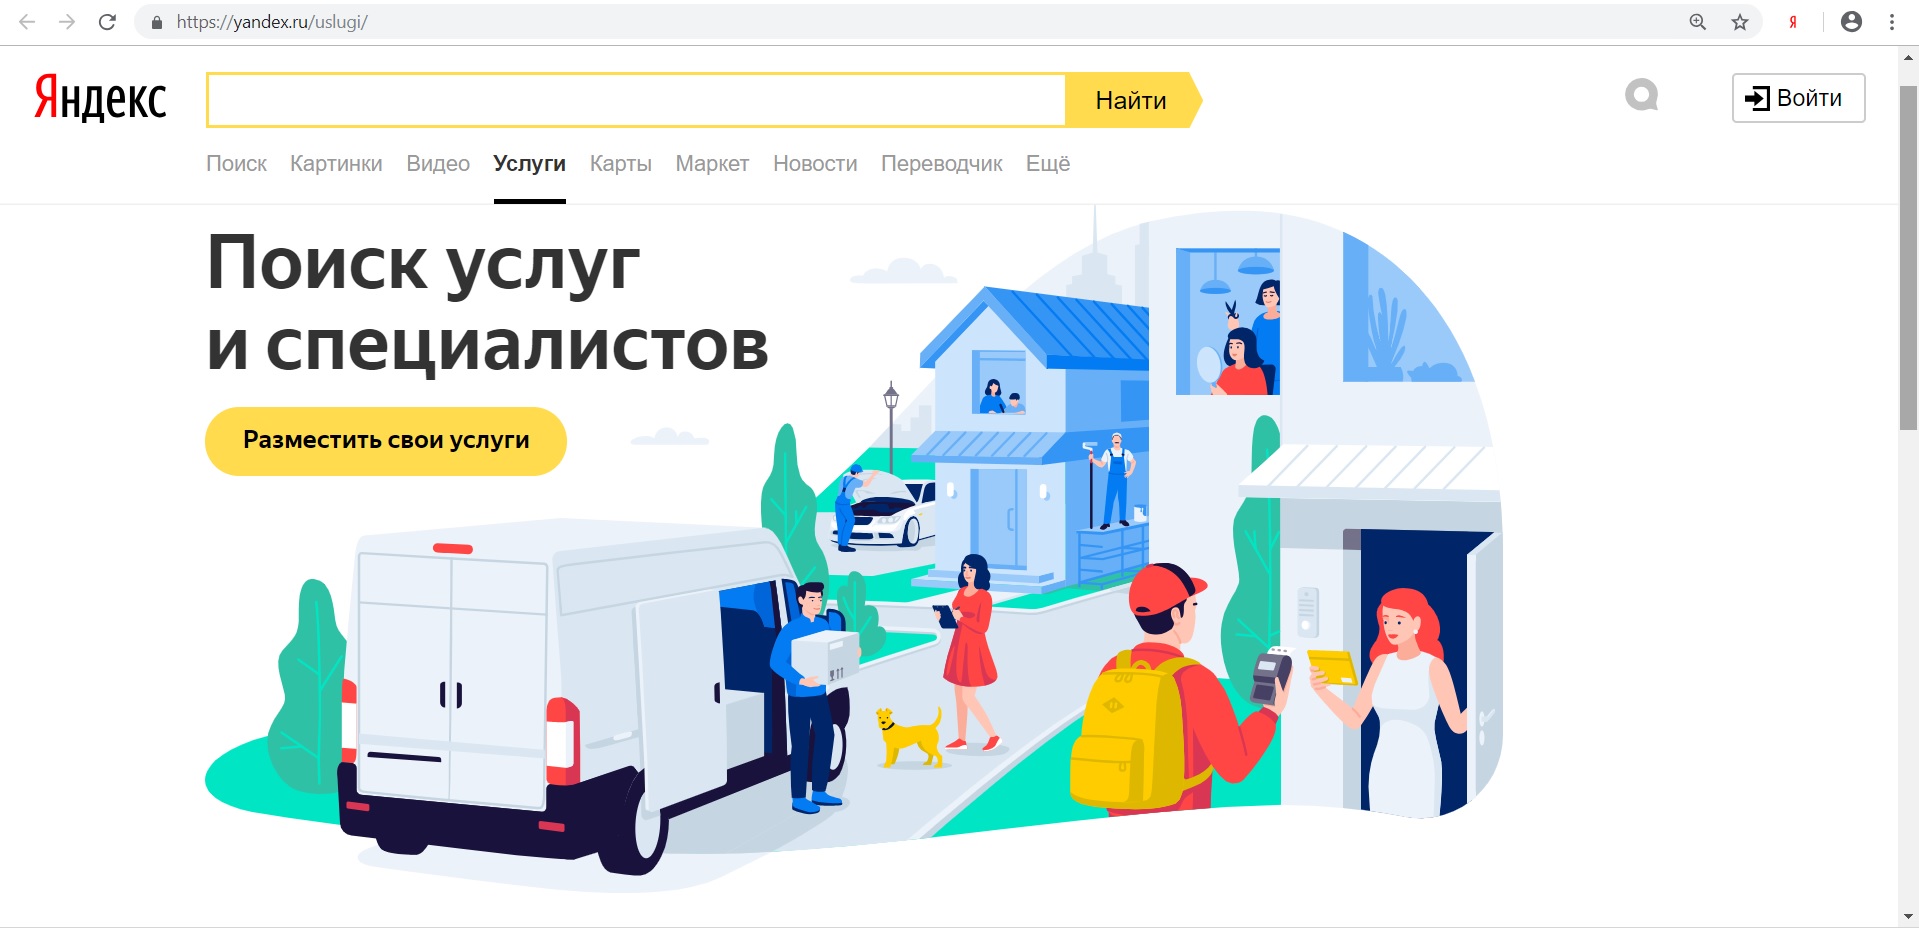 Yandex запустил новый сервис Яндекс.Услуги